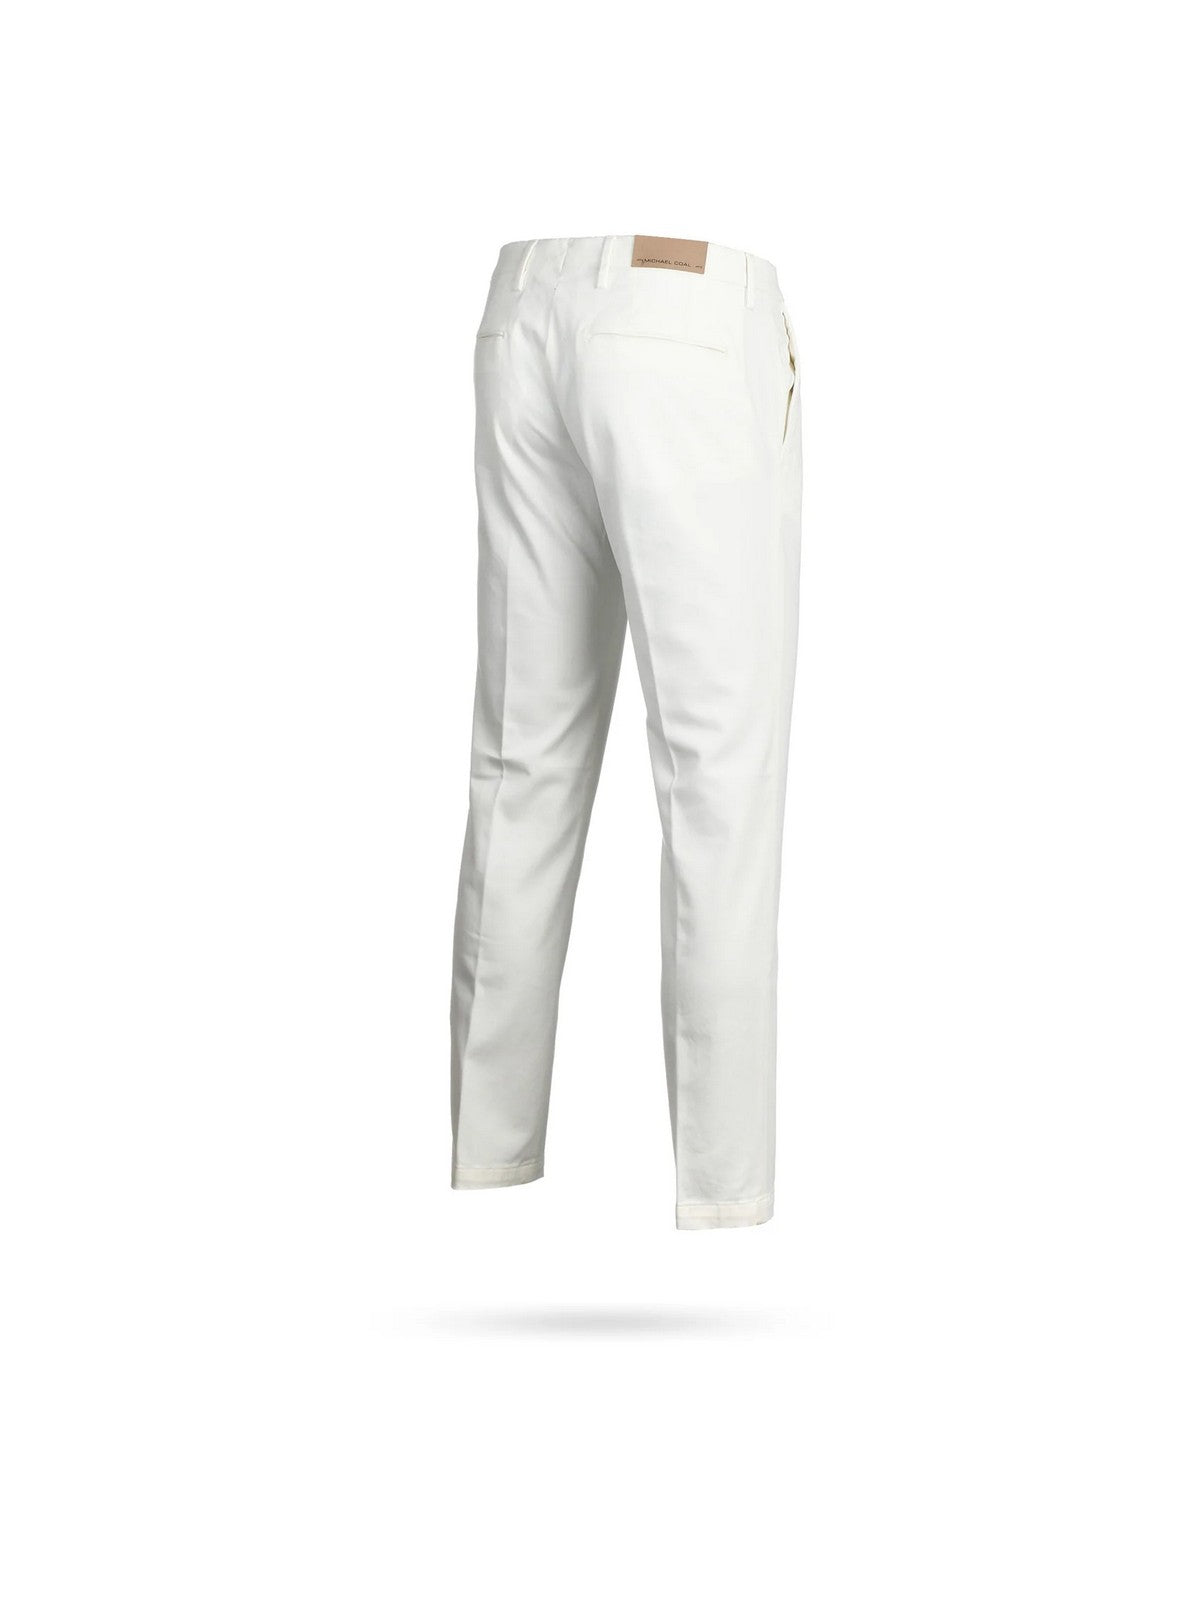 MICHAEL COAL Pantalon homme MCBRA3862F22C 009 Blanc